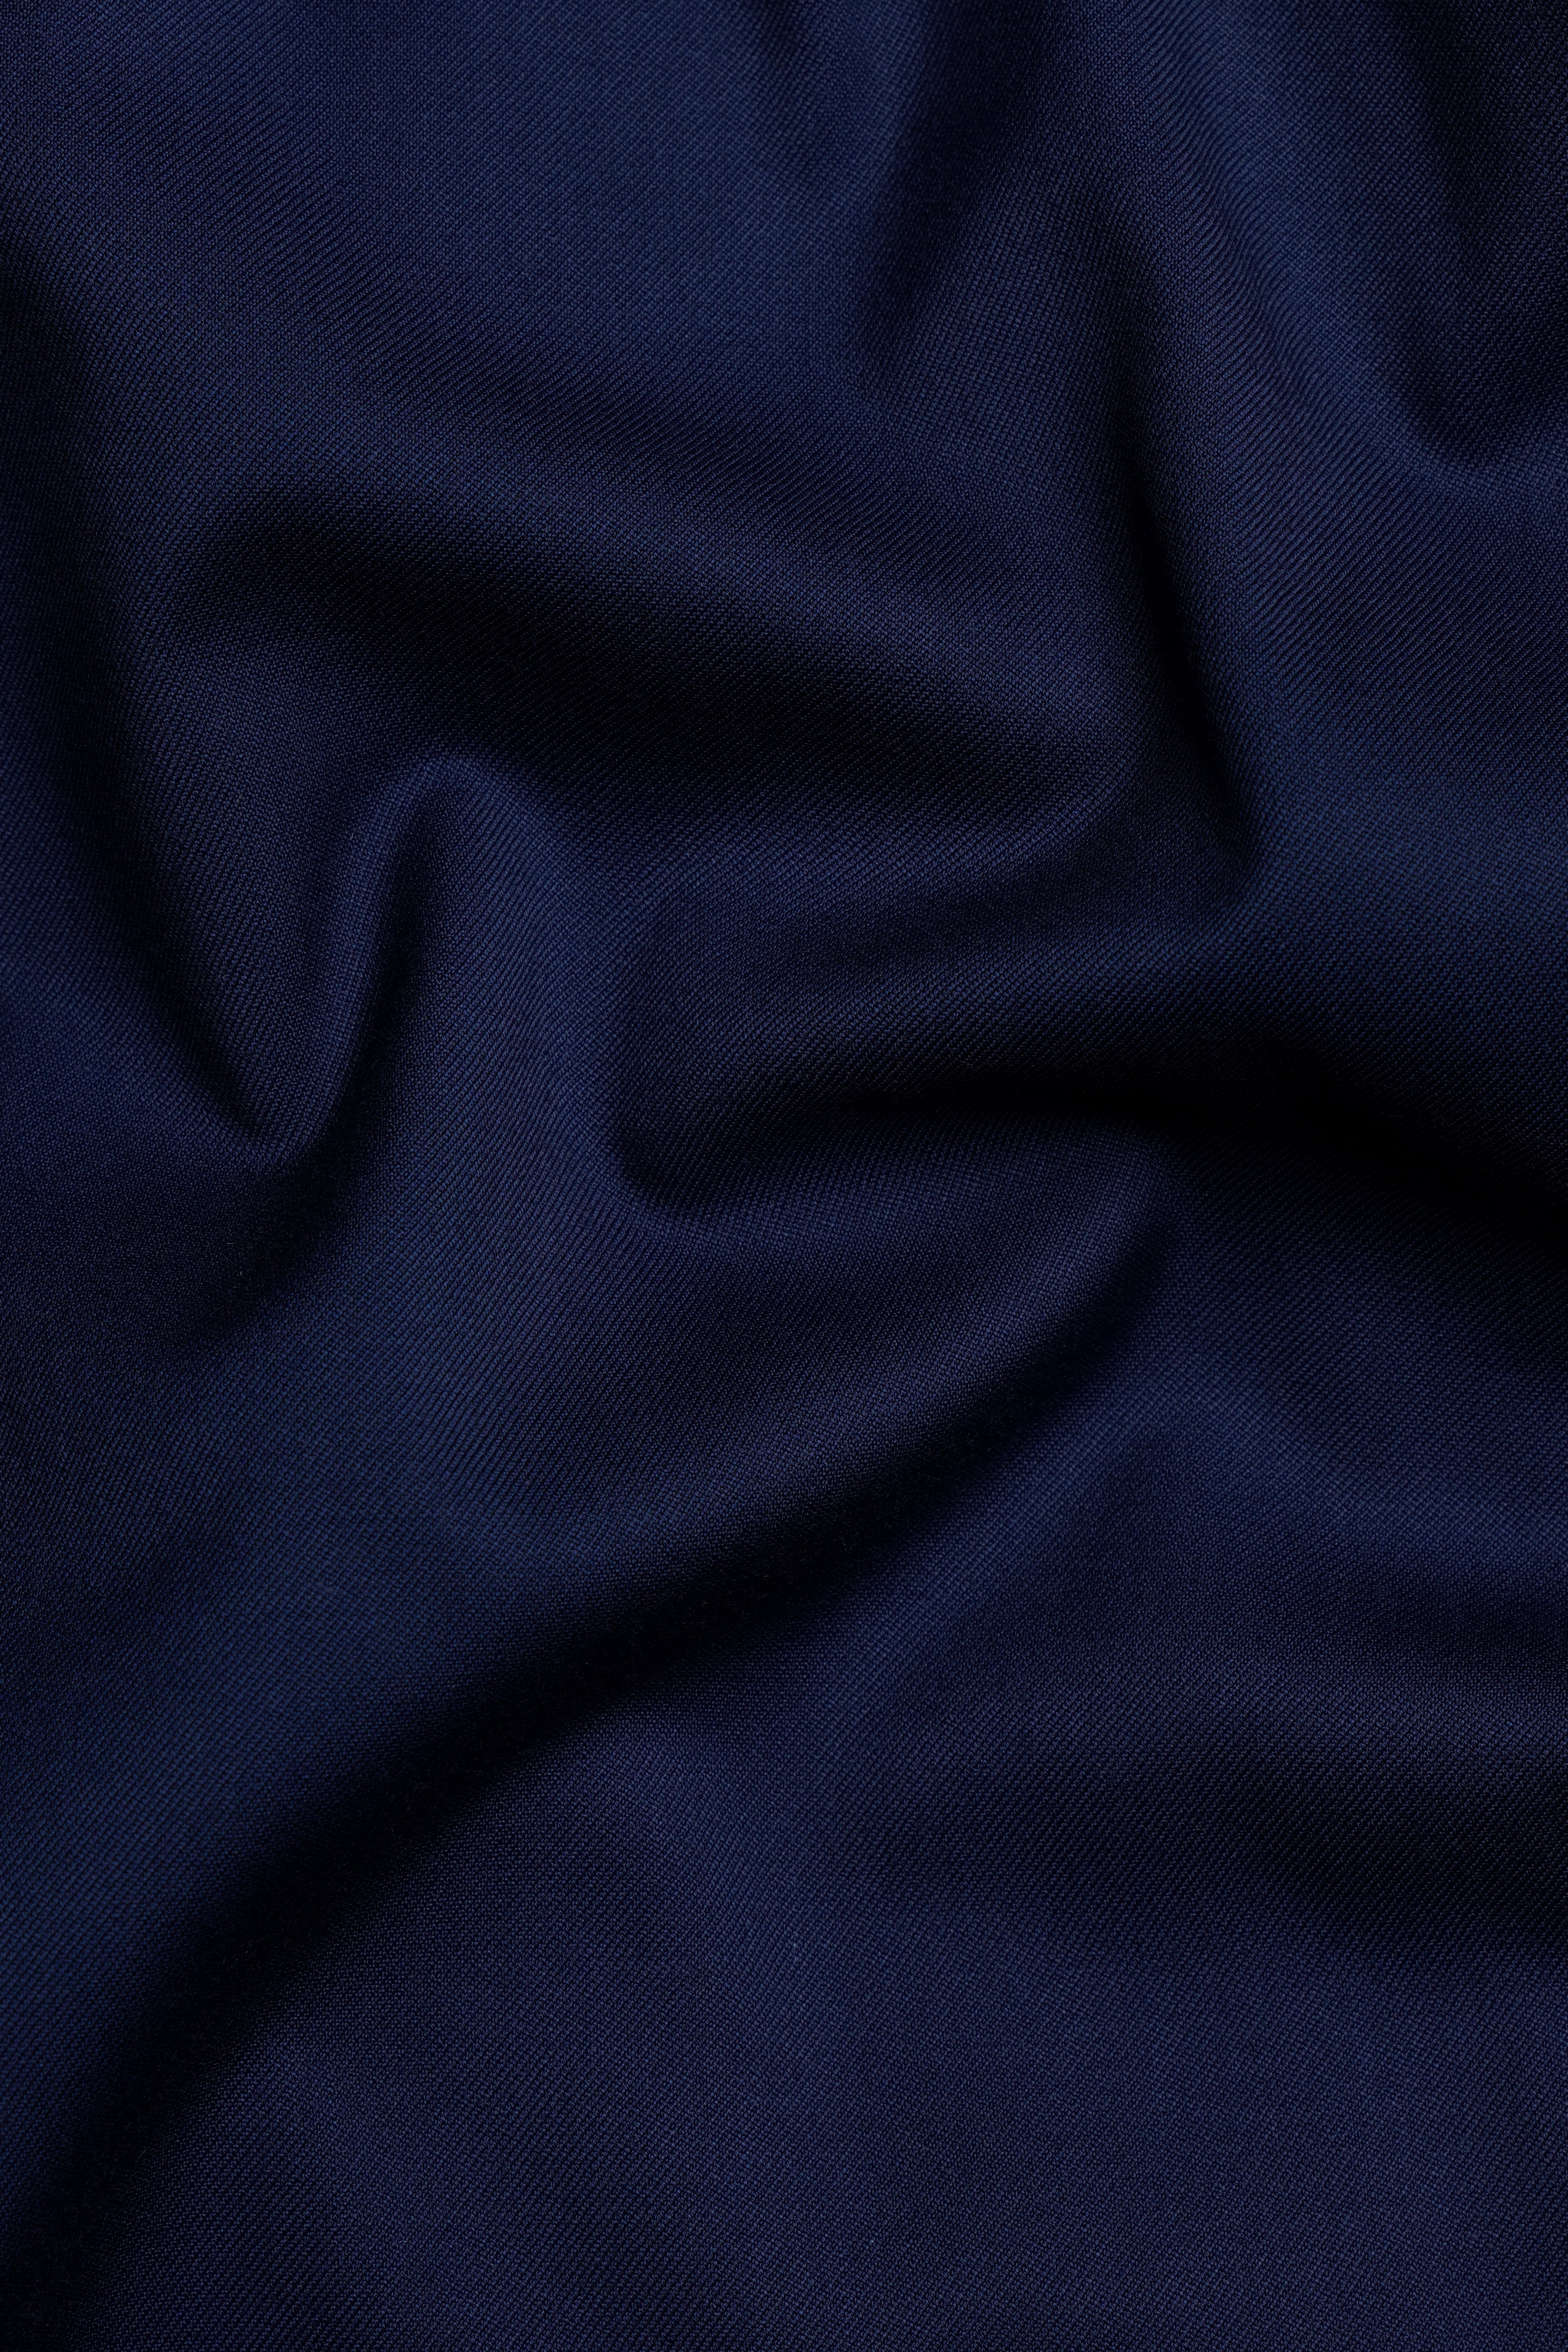 Cinder Blue Wool Rich Waistcoat V3077-36, V3077-38, V3077-40, V3077-42, V3077-44, V3077-46, V3077-48, V3077-50, V3077-77, V3077-54, V3077-56, V3077-58, V3077-60